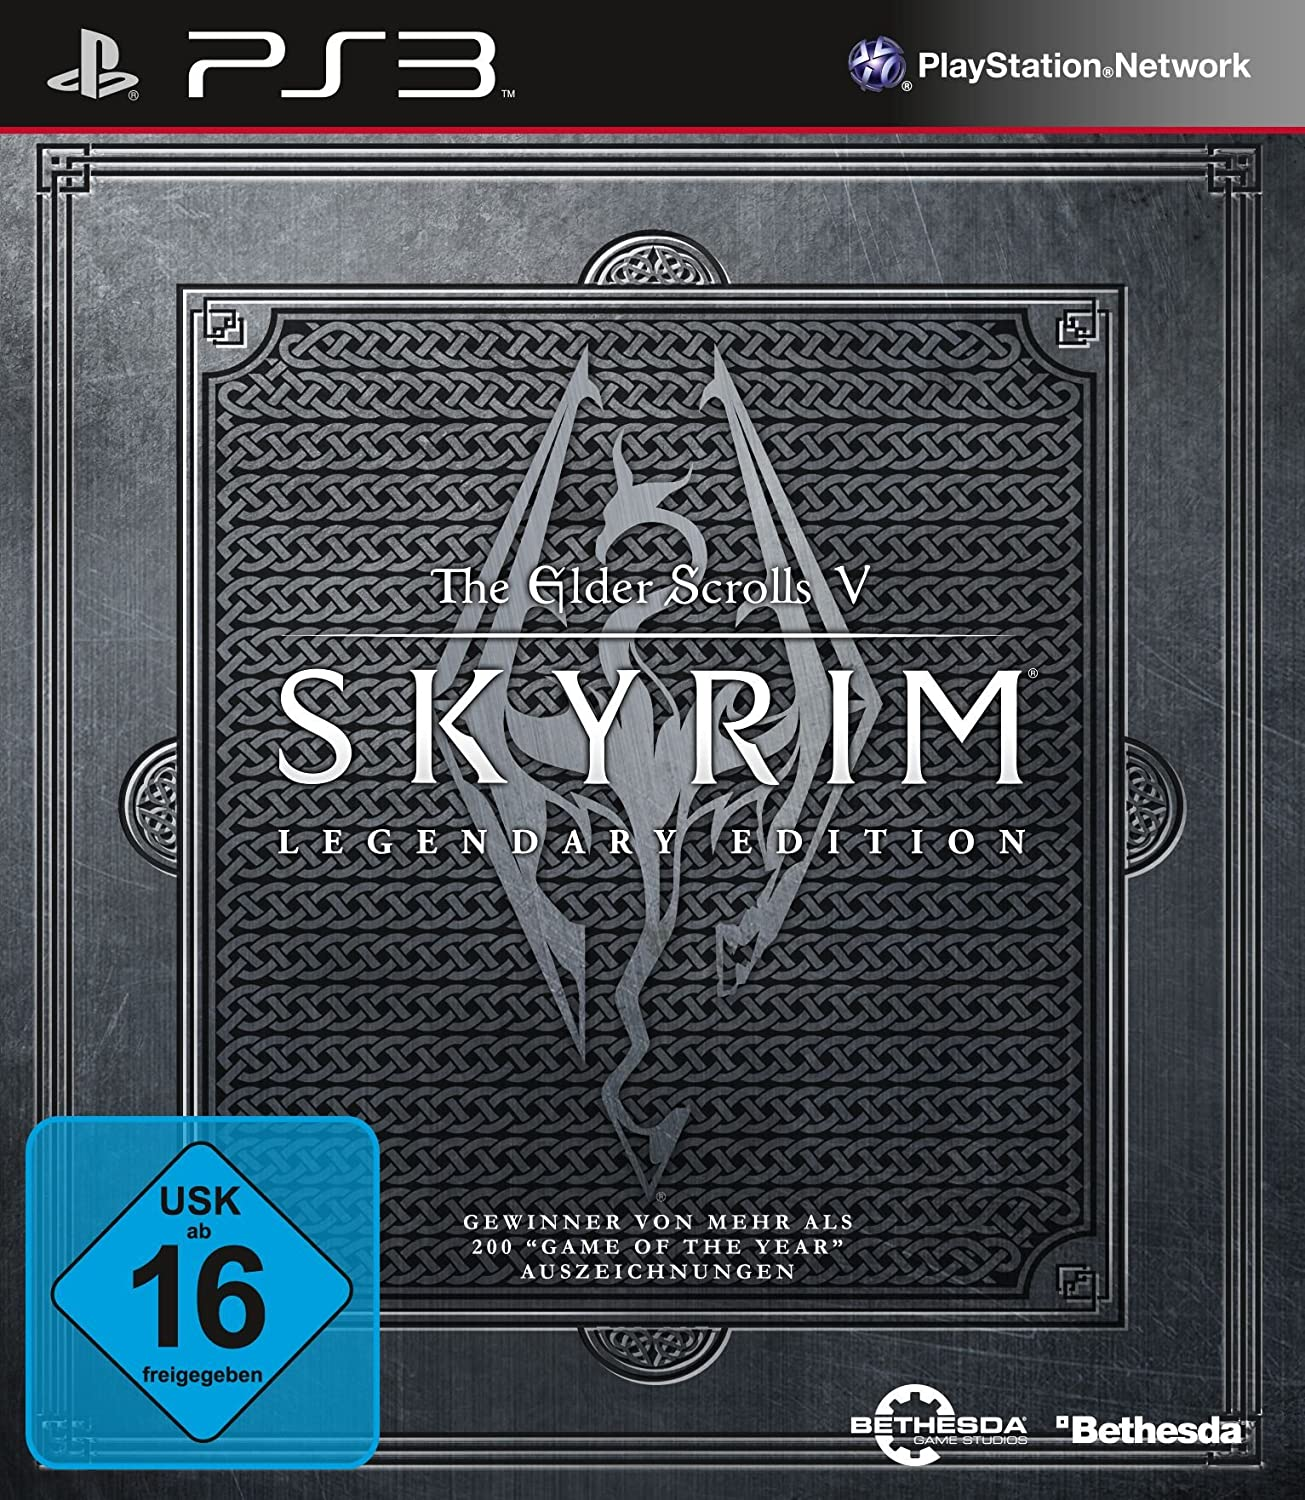 The Elder Scrolls V Skyrim 3] Edition [PlayStation Legendary - 